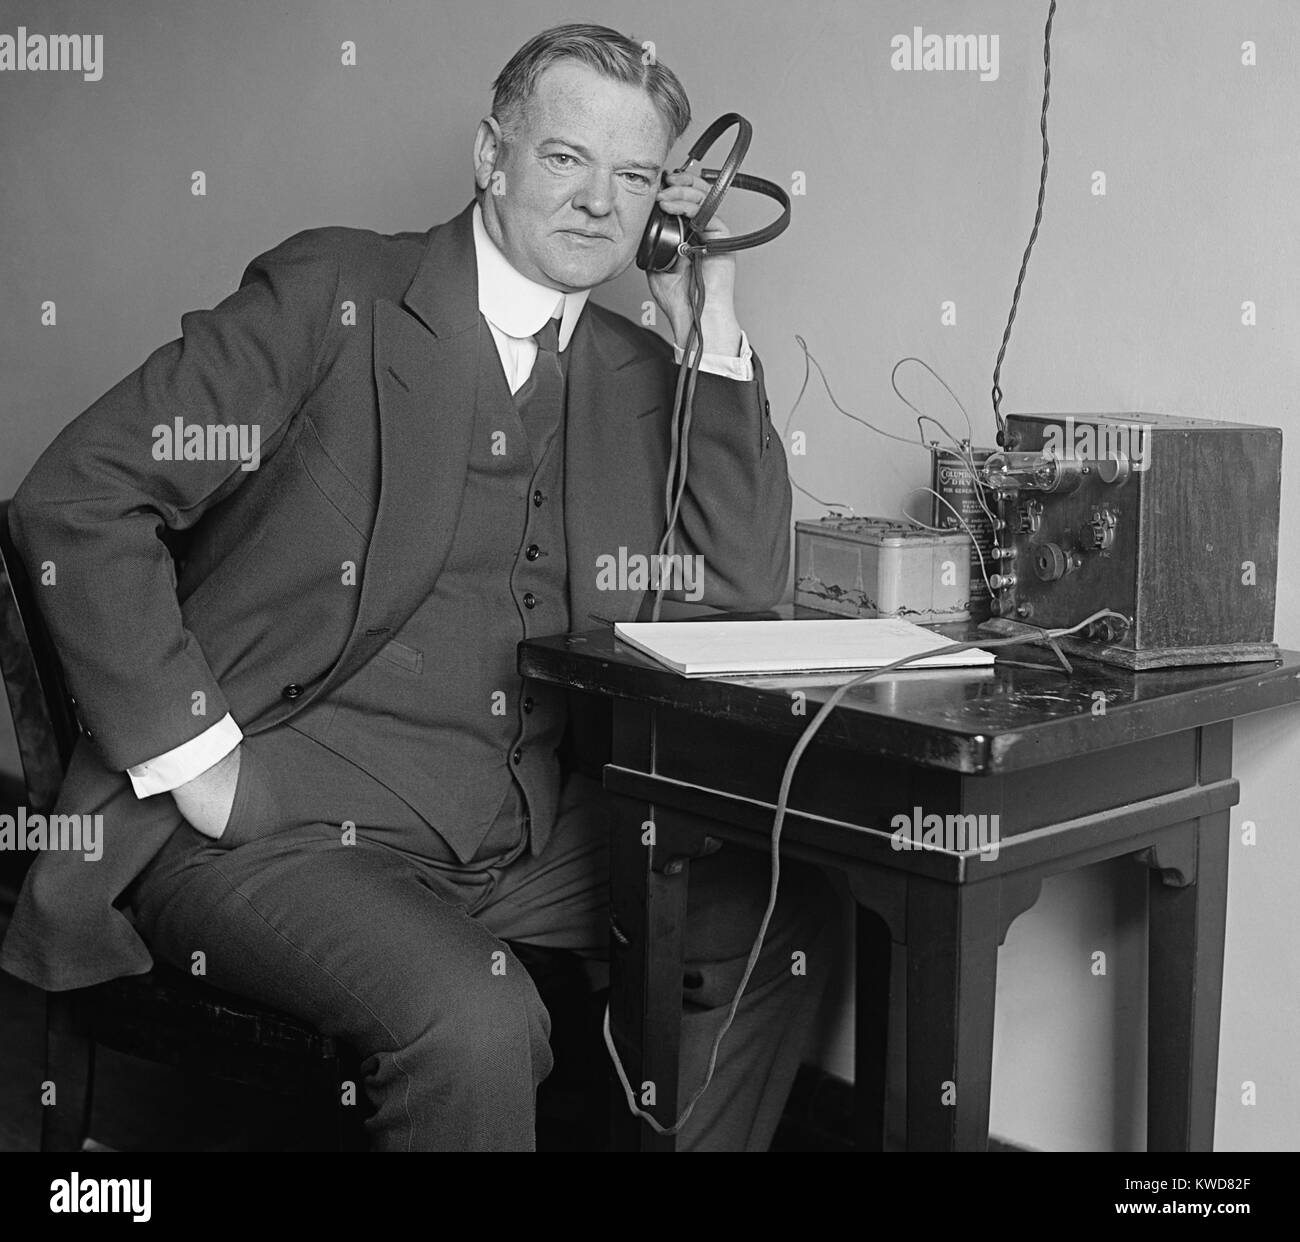 Herbert Hoover, Secretary of Commerce, listening to a radio on Dec. 31, 1924. (BSLOC 2015 16 50) Stock Photo